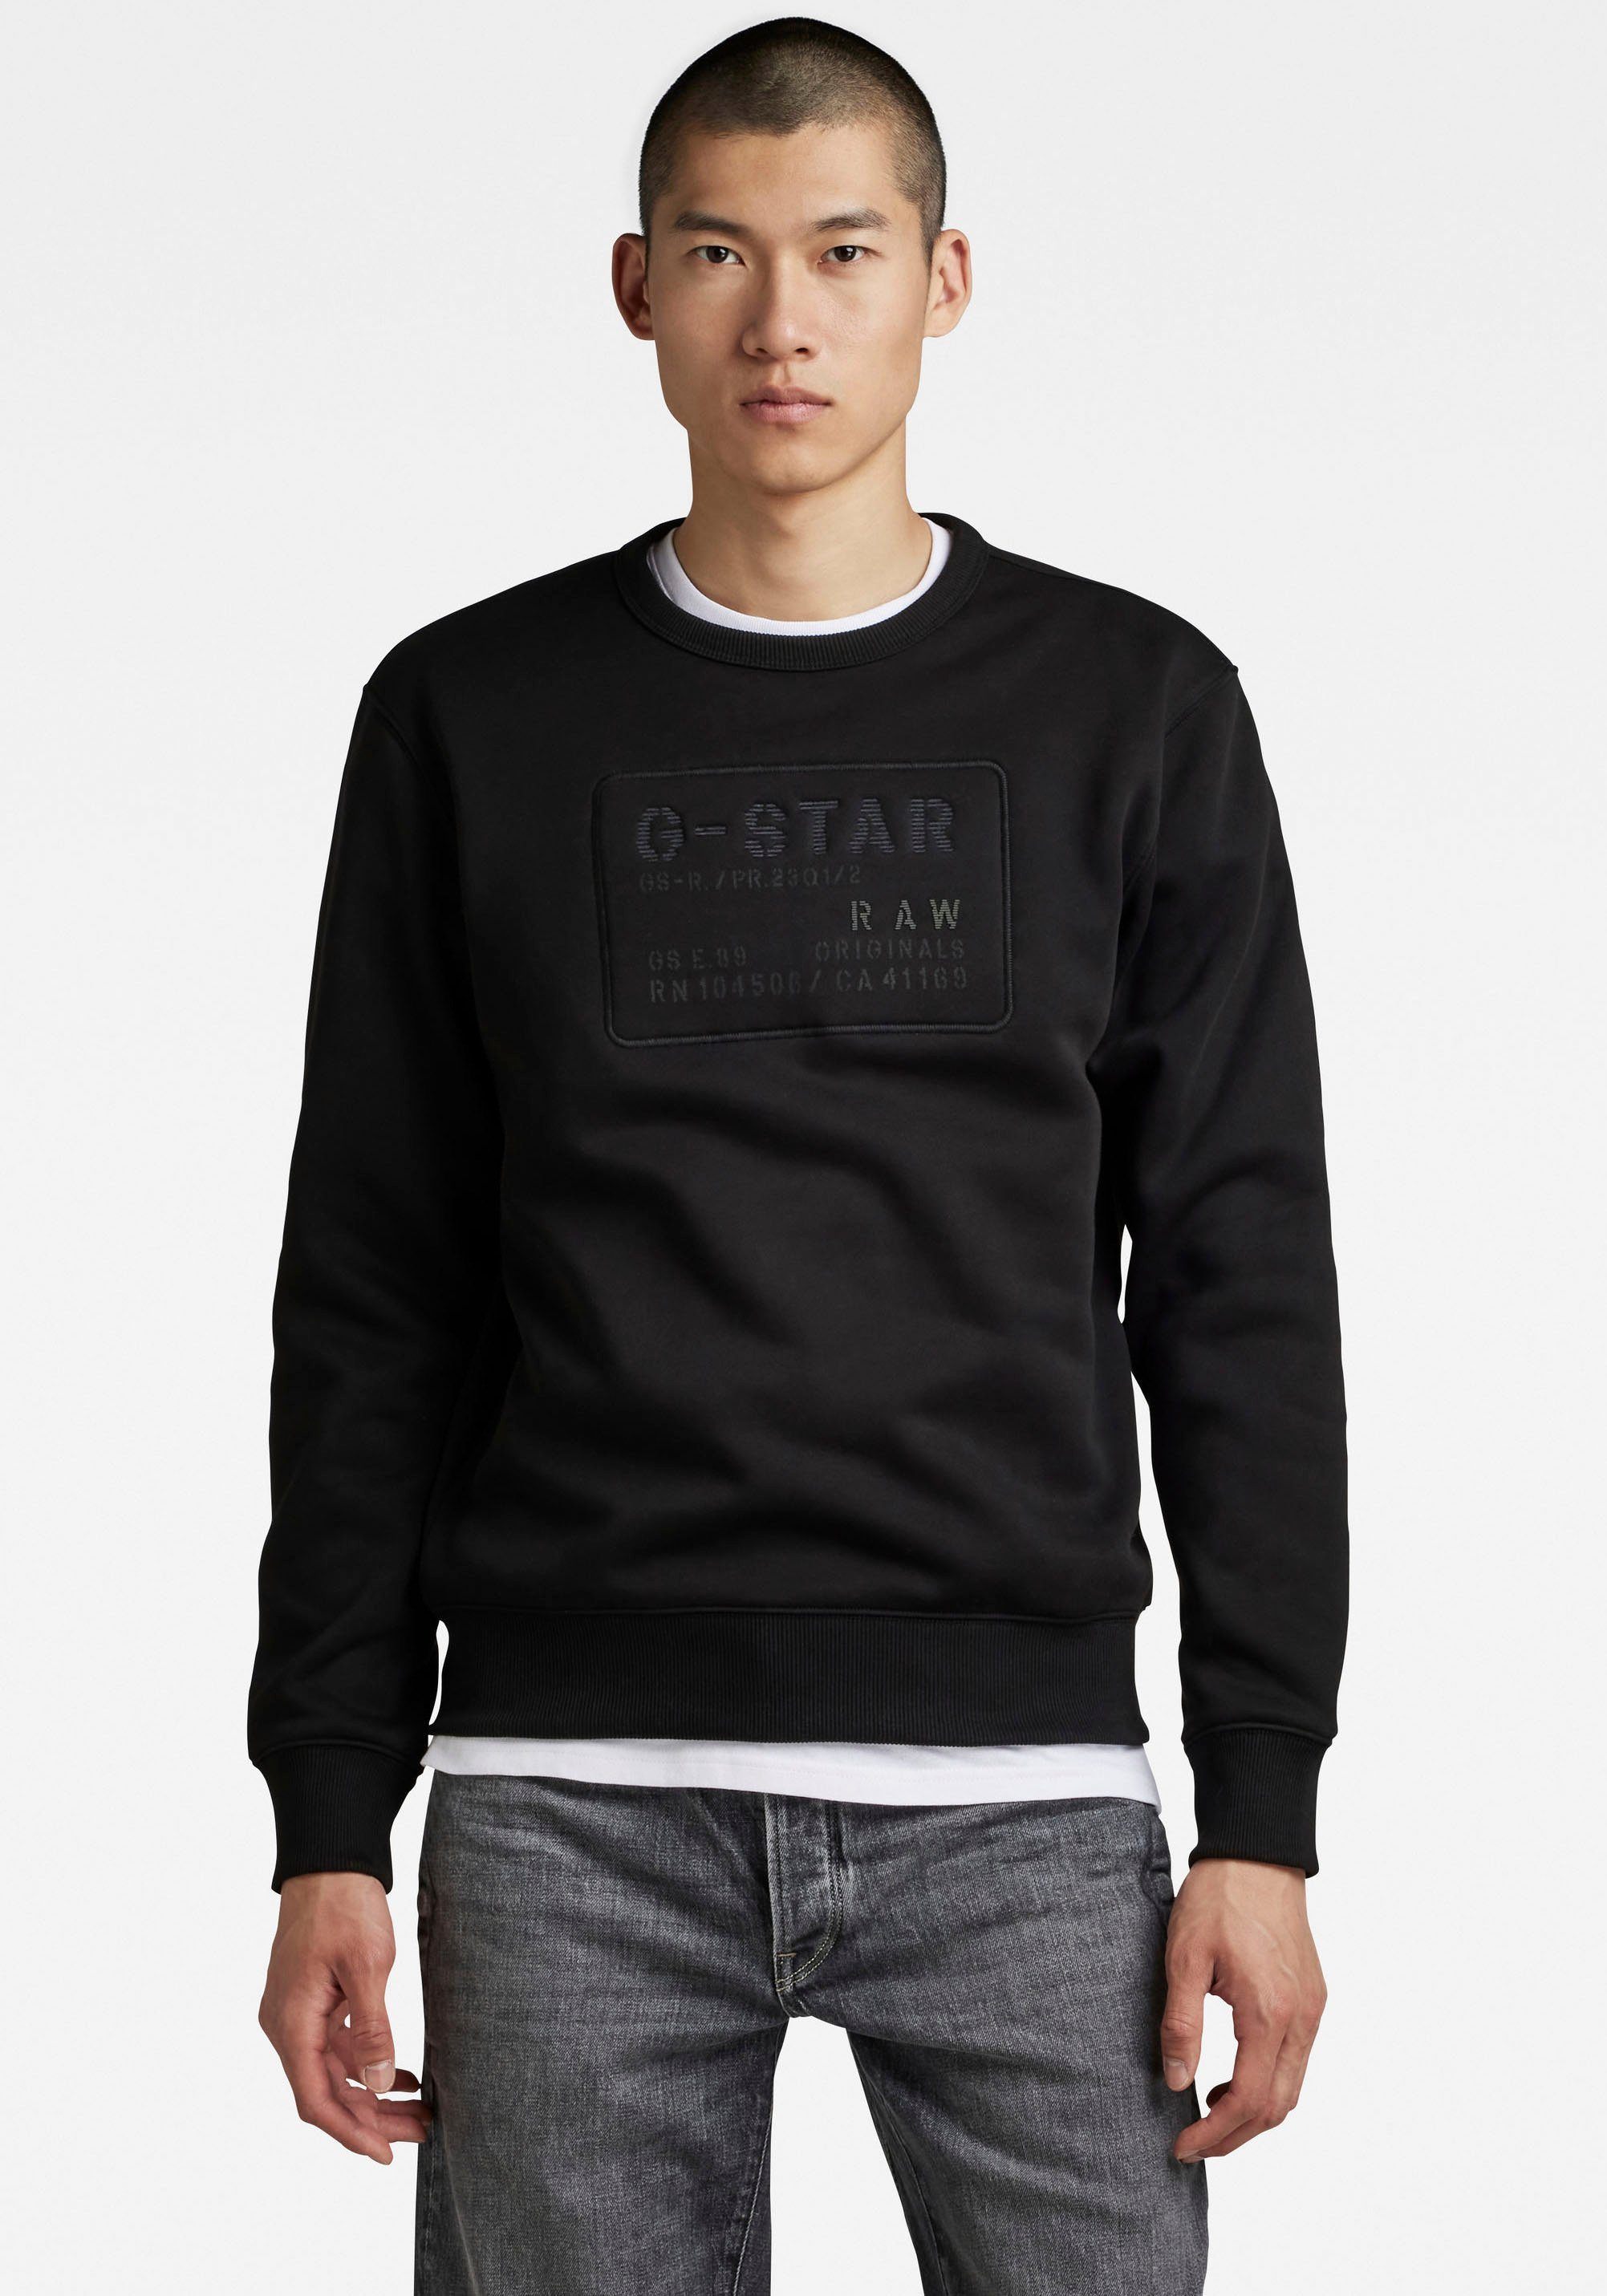 G-Star RAW Dark Originals Sweatshirt black Sweatshirt